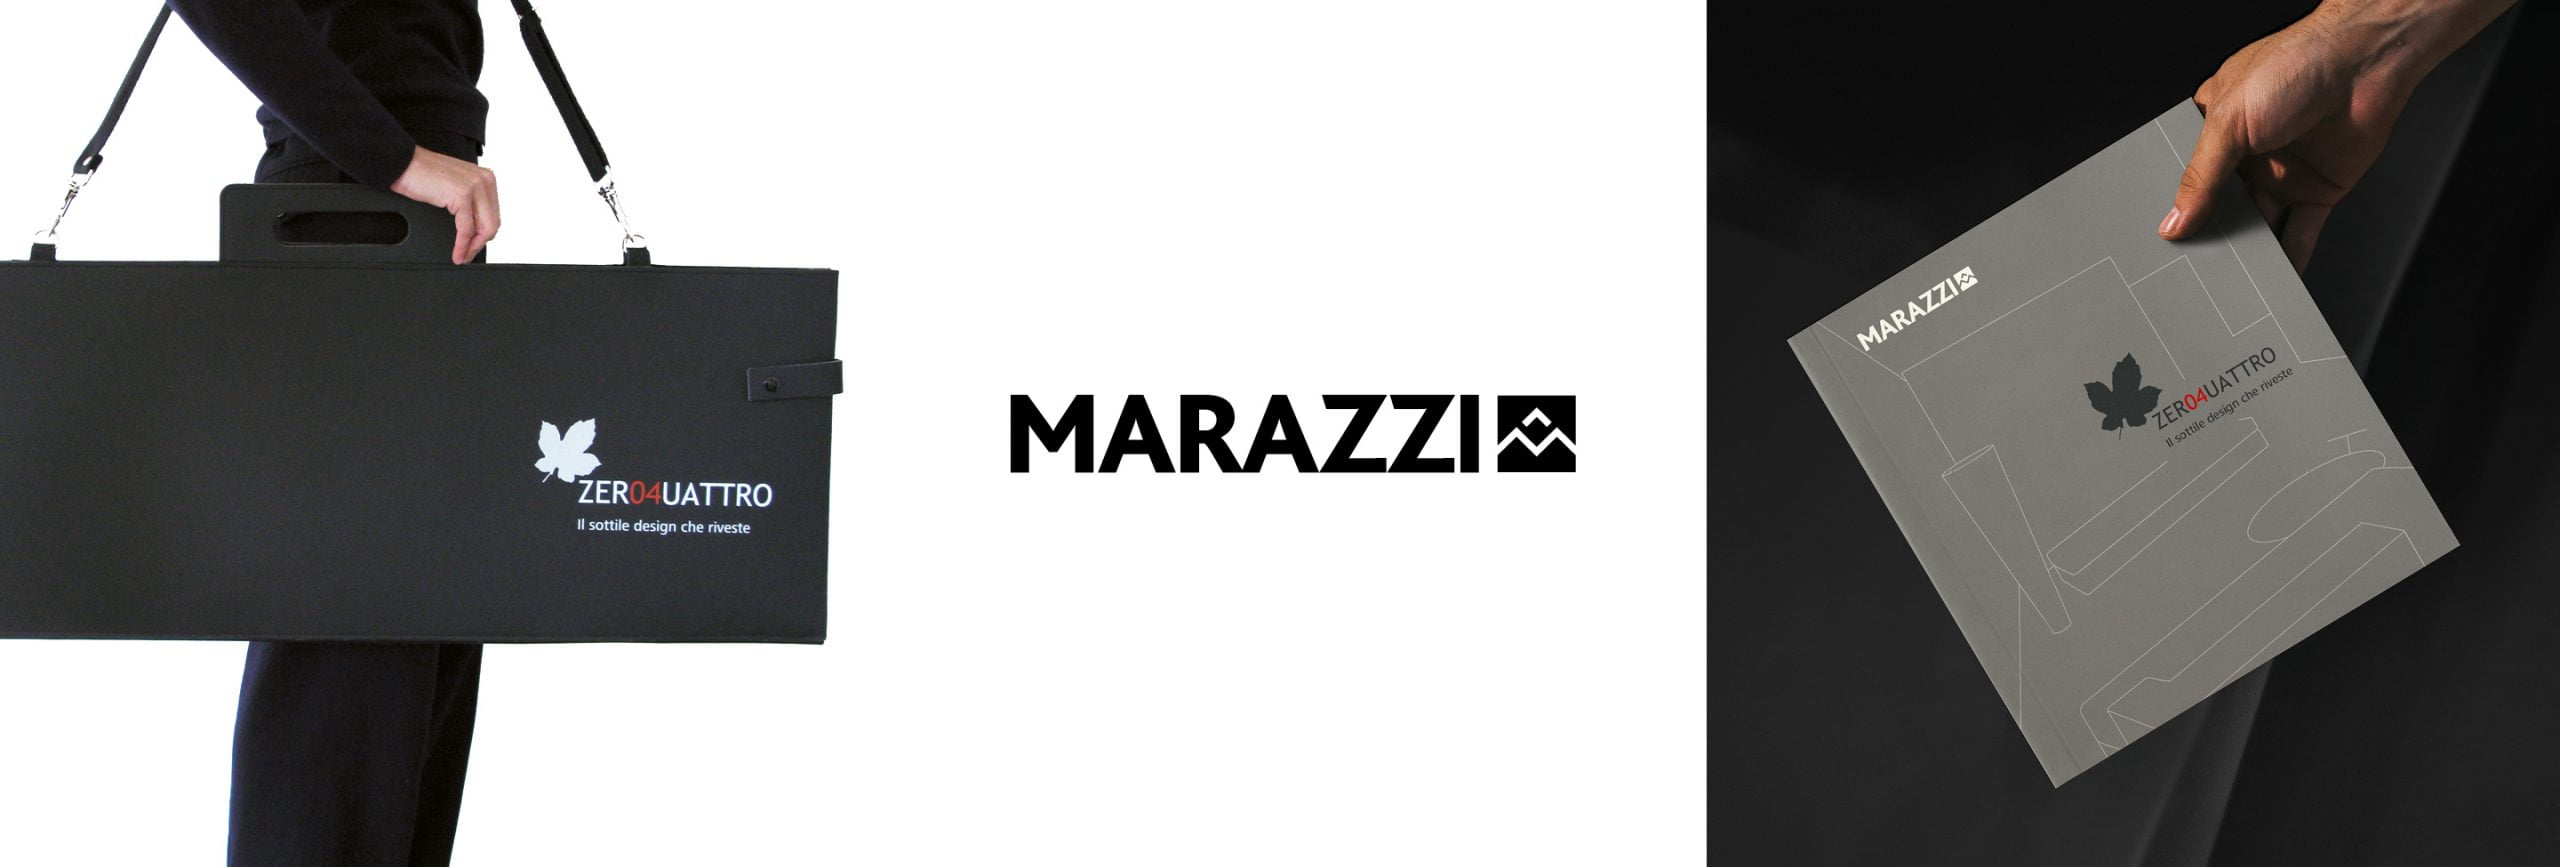 Slide Portfolio Marazzi Modena scaled